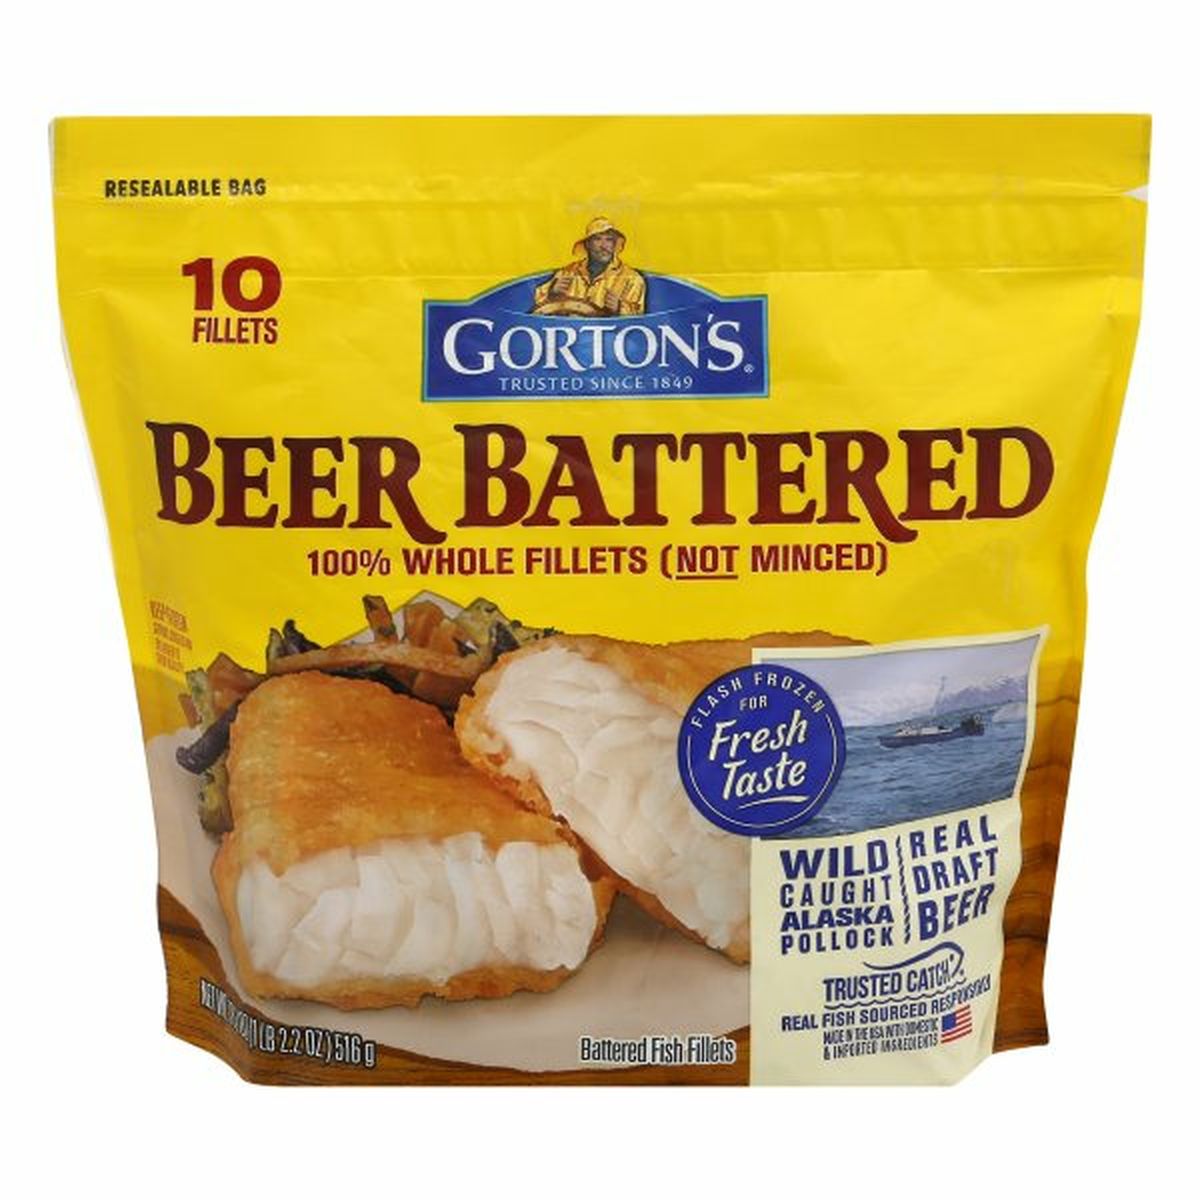 Calories in Gorton's Fish Fillets, Beer Battered